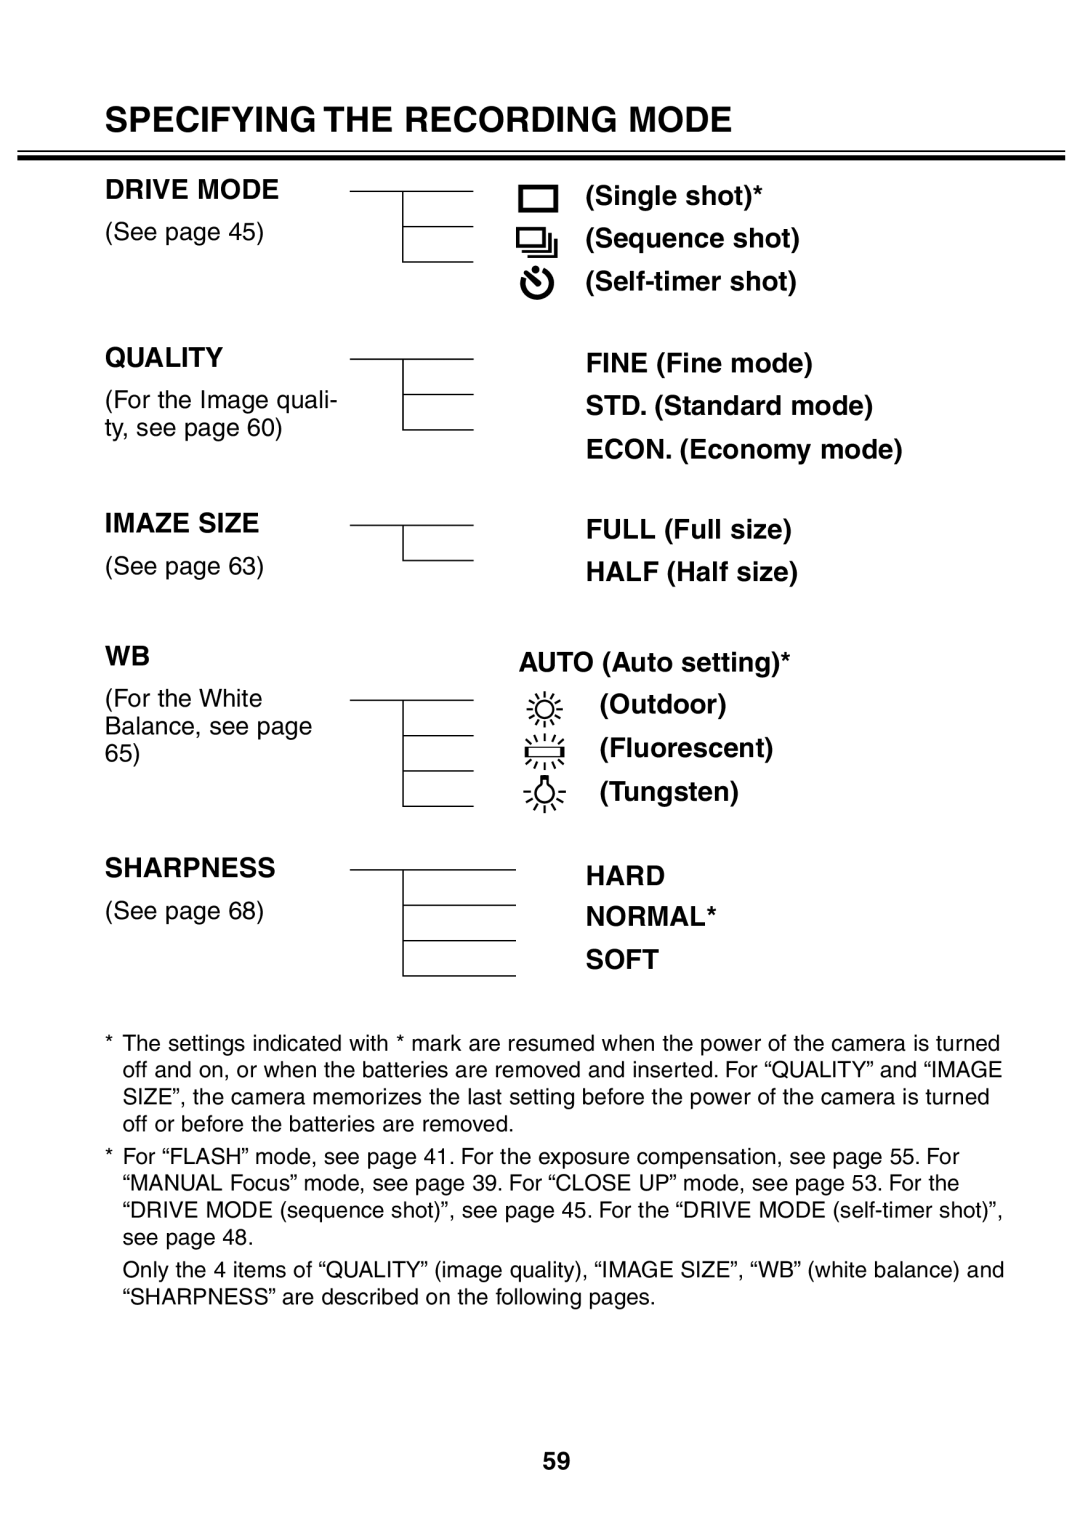 Minolta 2330 instruction manual Drive Mode, Quality, Imaze Size, Sharpness, Hard Normal Soft 